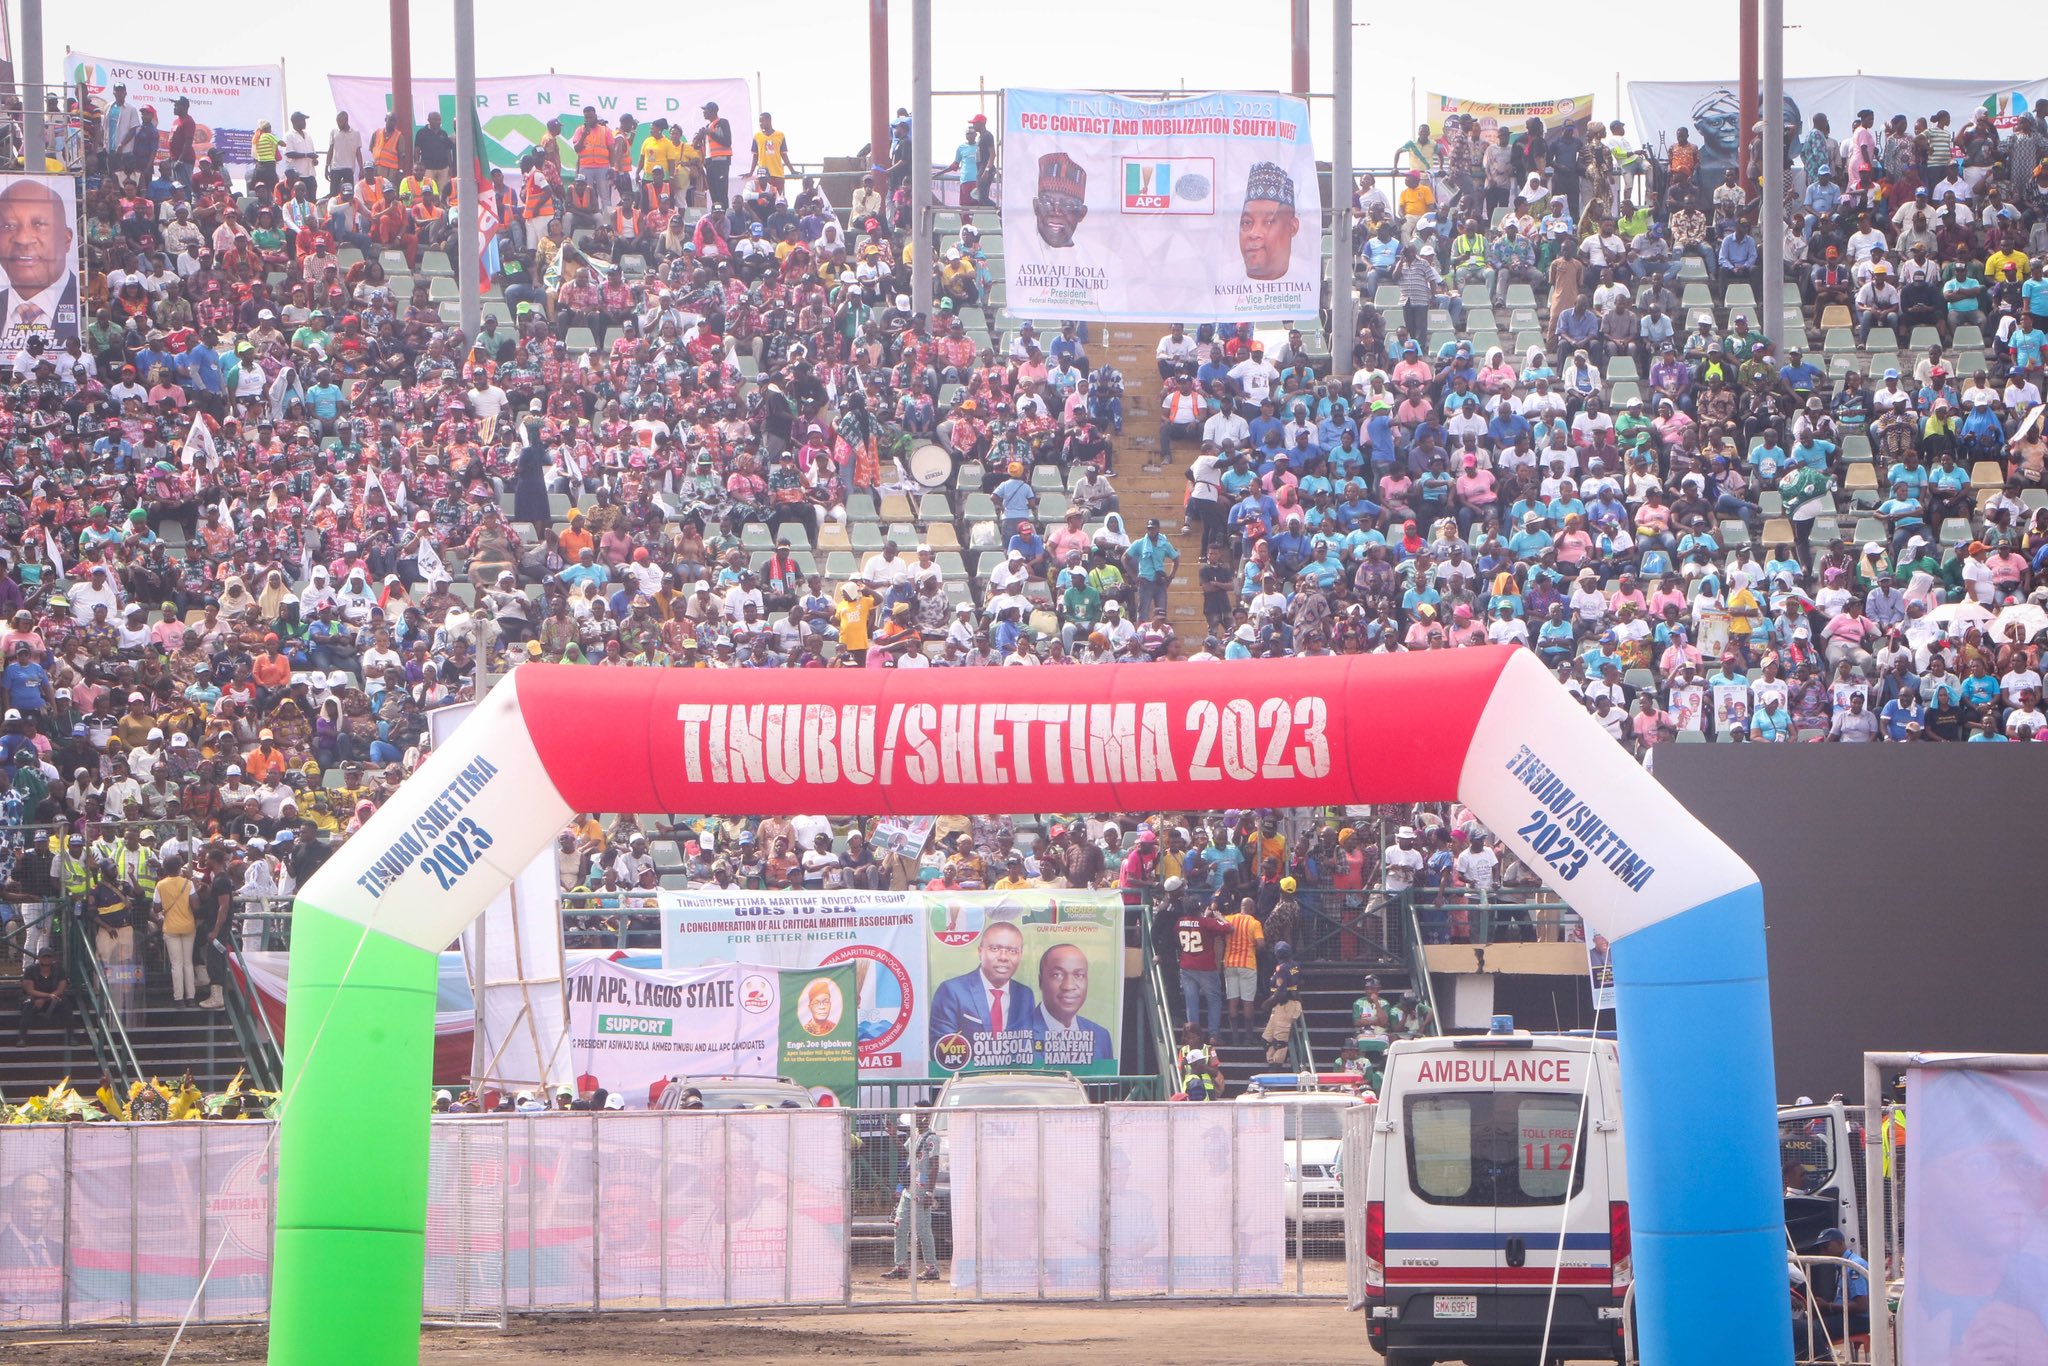 Tinubu shuts down Lagos as APC rally records mammoth crowd